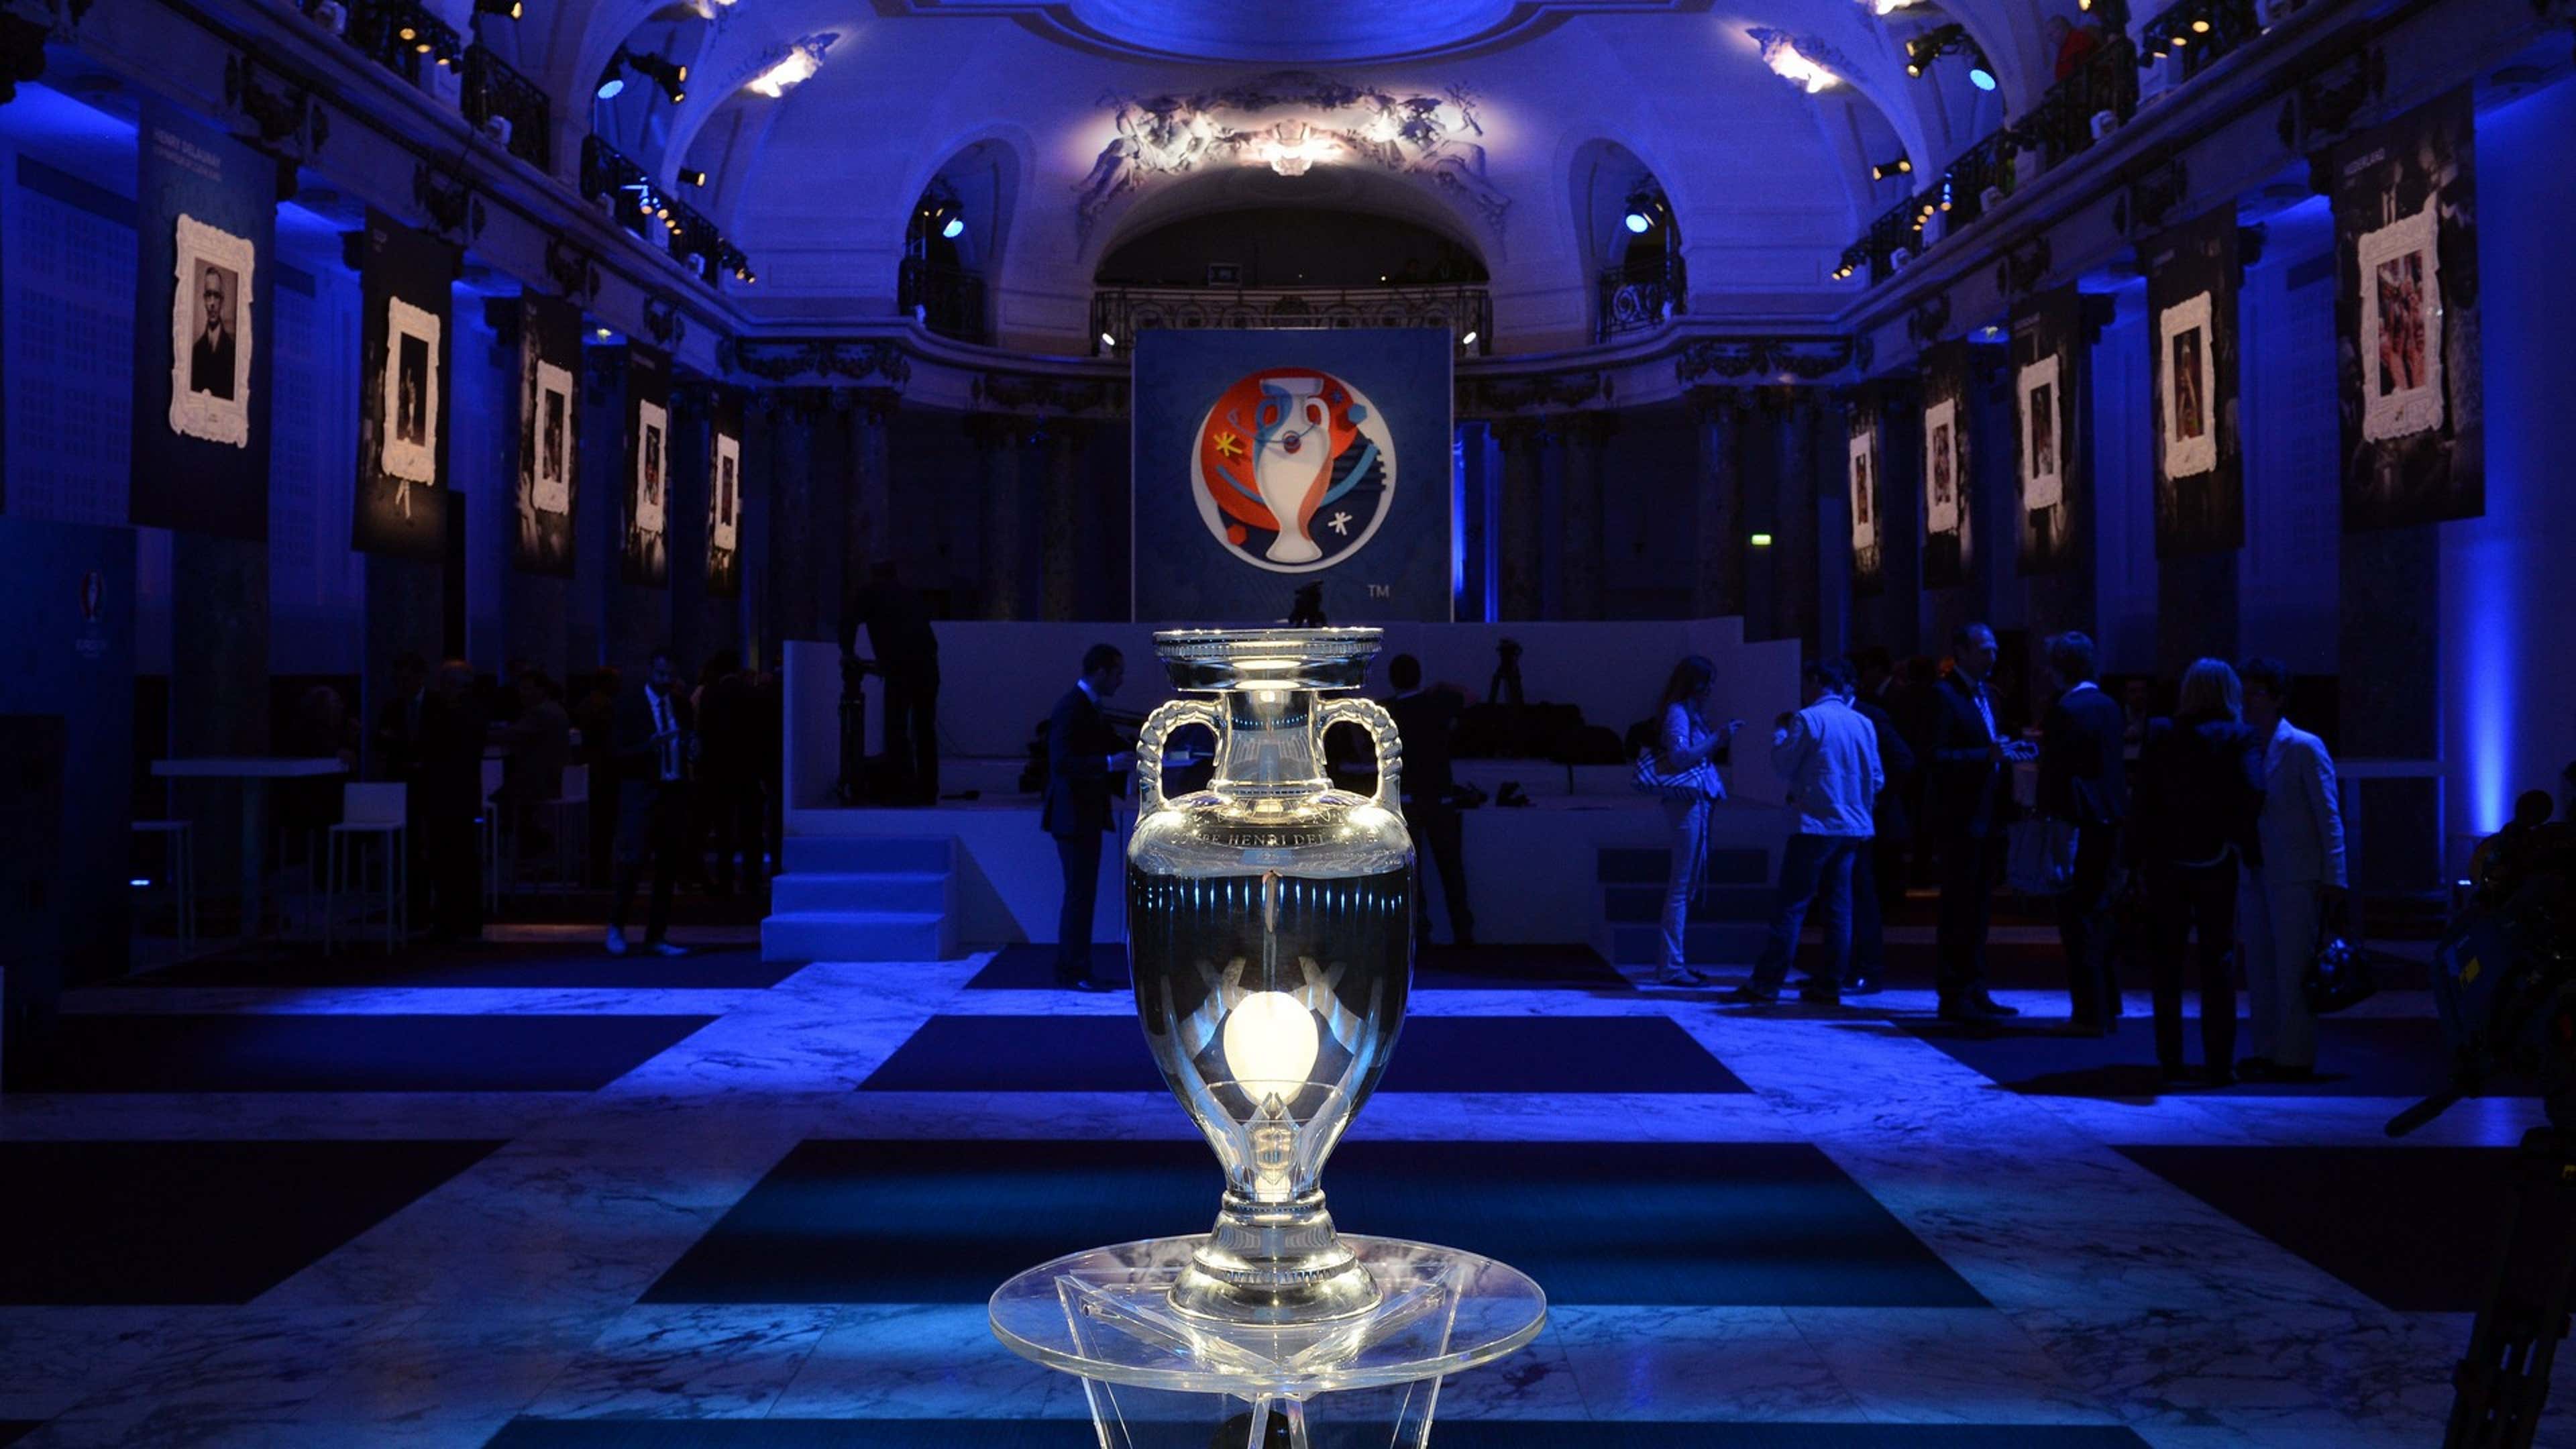 Euro 2016 trophy